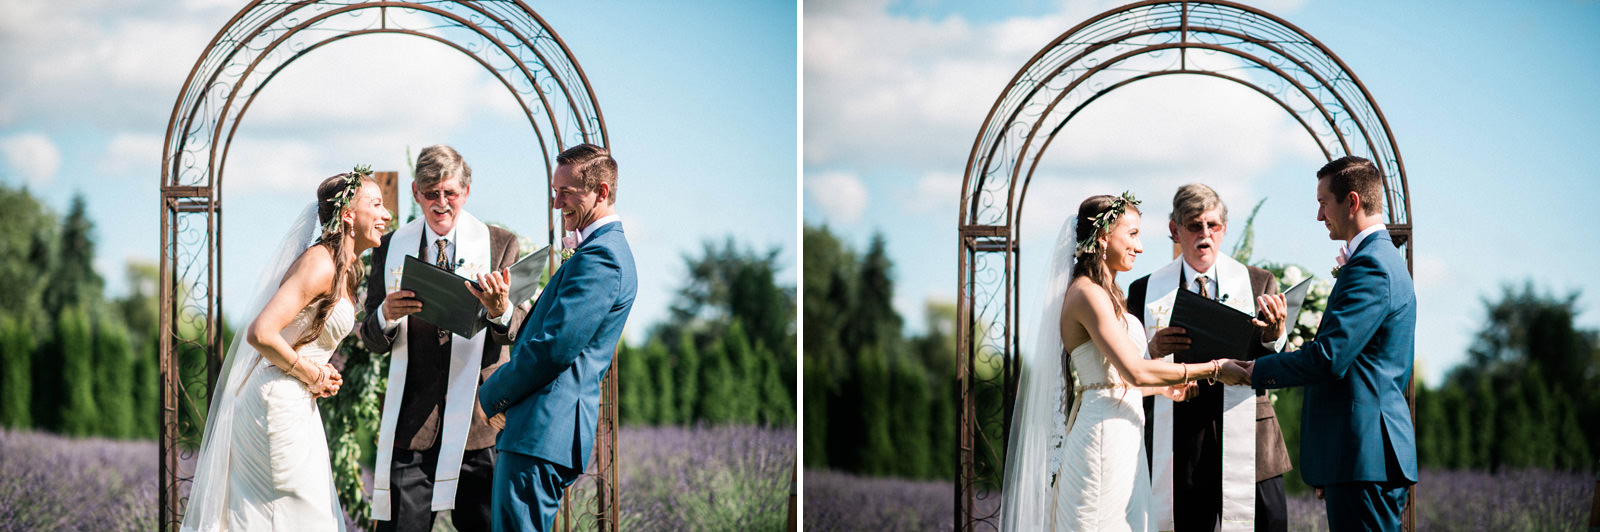 044-woodinville-lavendar-farm-wedding-with-golden-glowy-photos.jpg